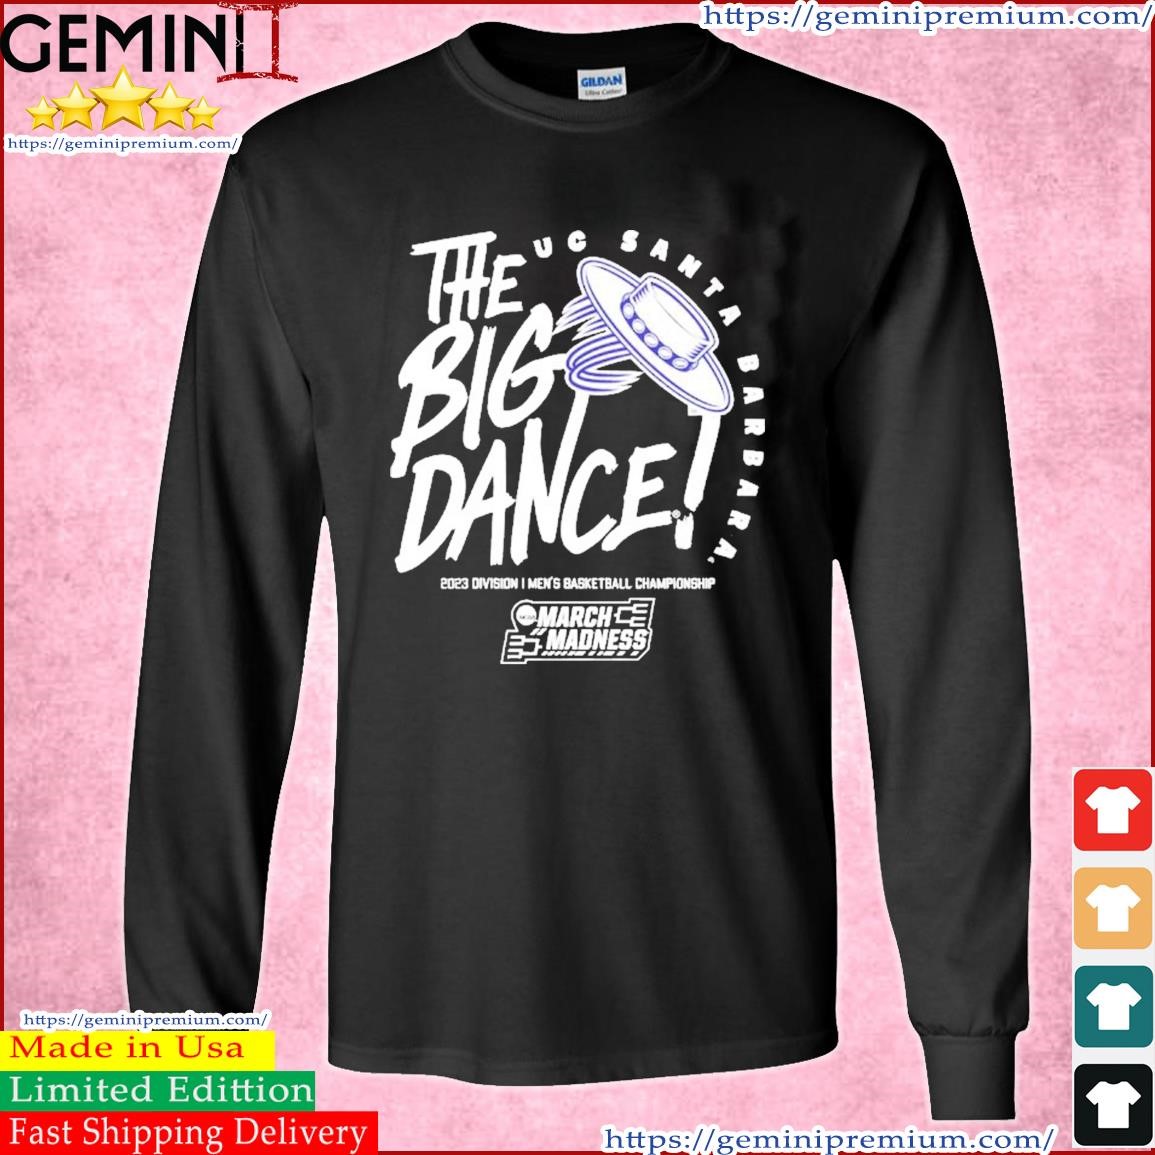 The Big Dance March Madness 2023 Uc Santa Barbara Men's Basketball Shirt Long Sleeve Tee.jpg